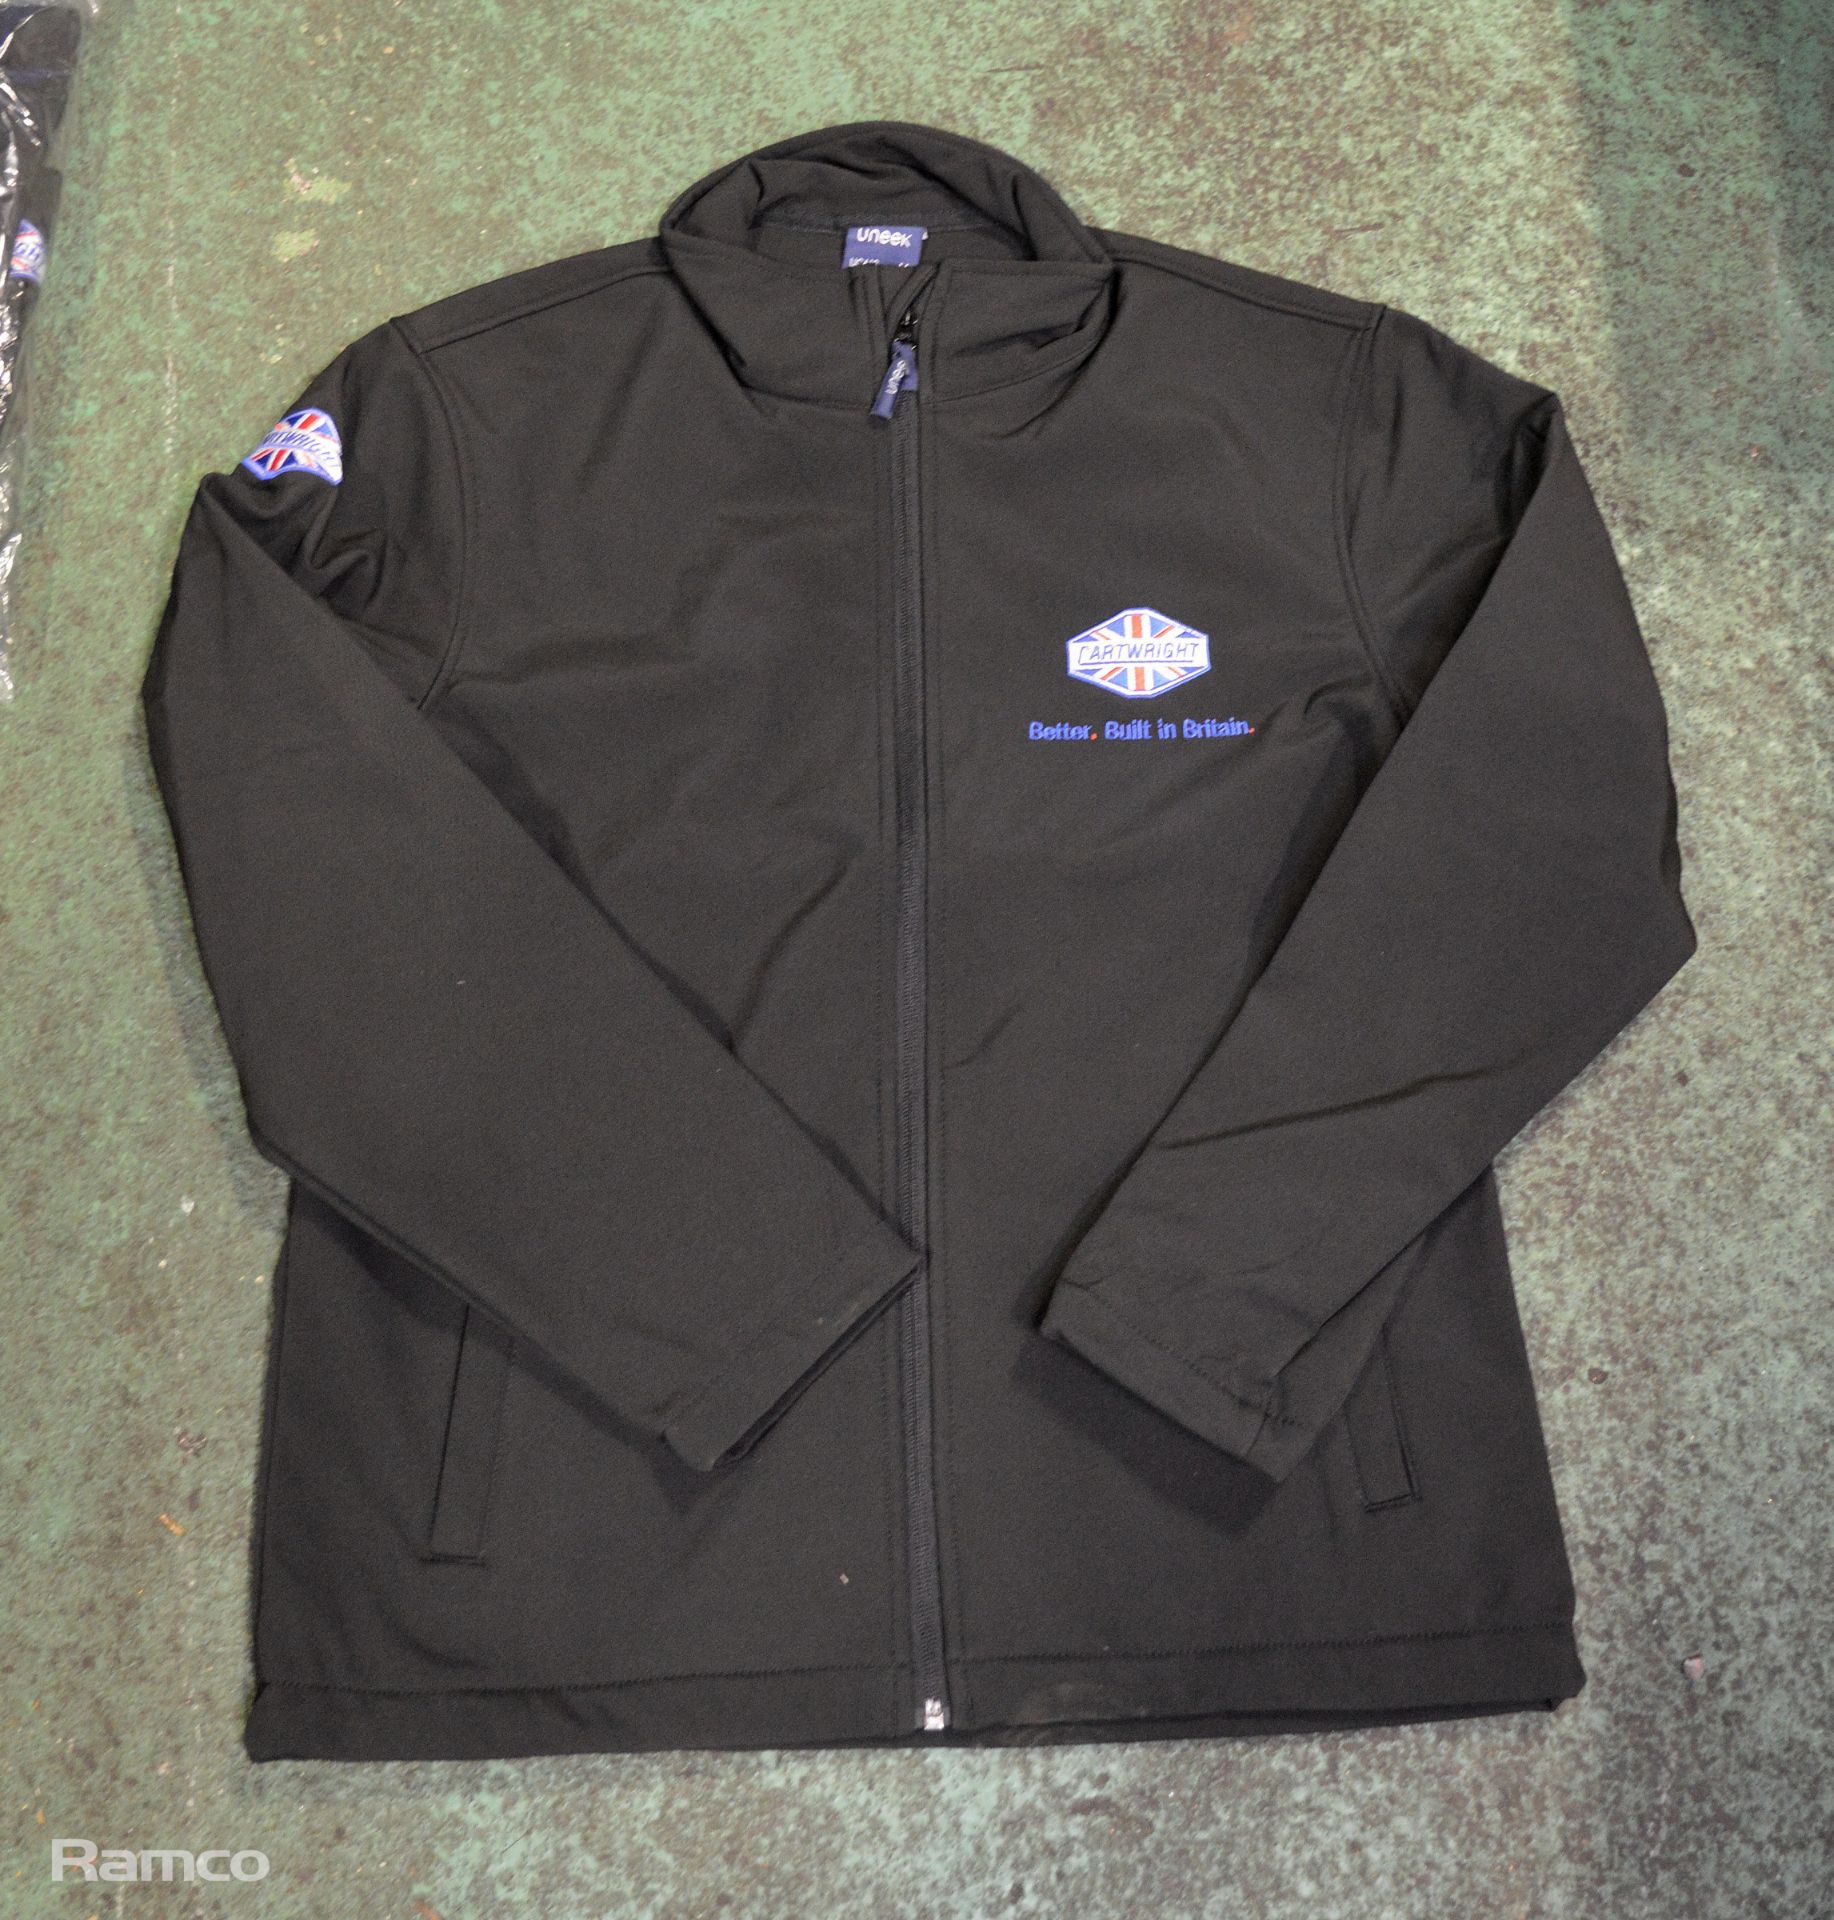 13x Cartwright branded soft shell jackets - medium - Image 4 of 4